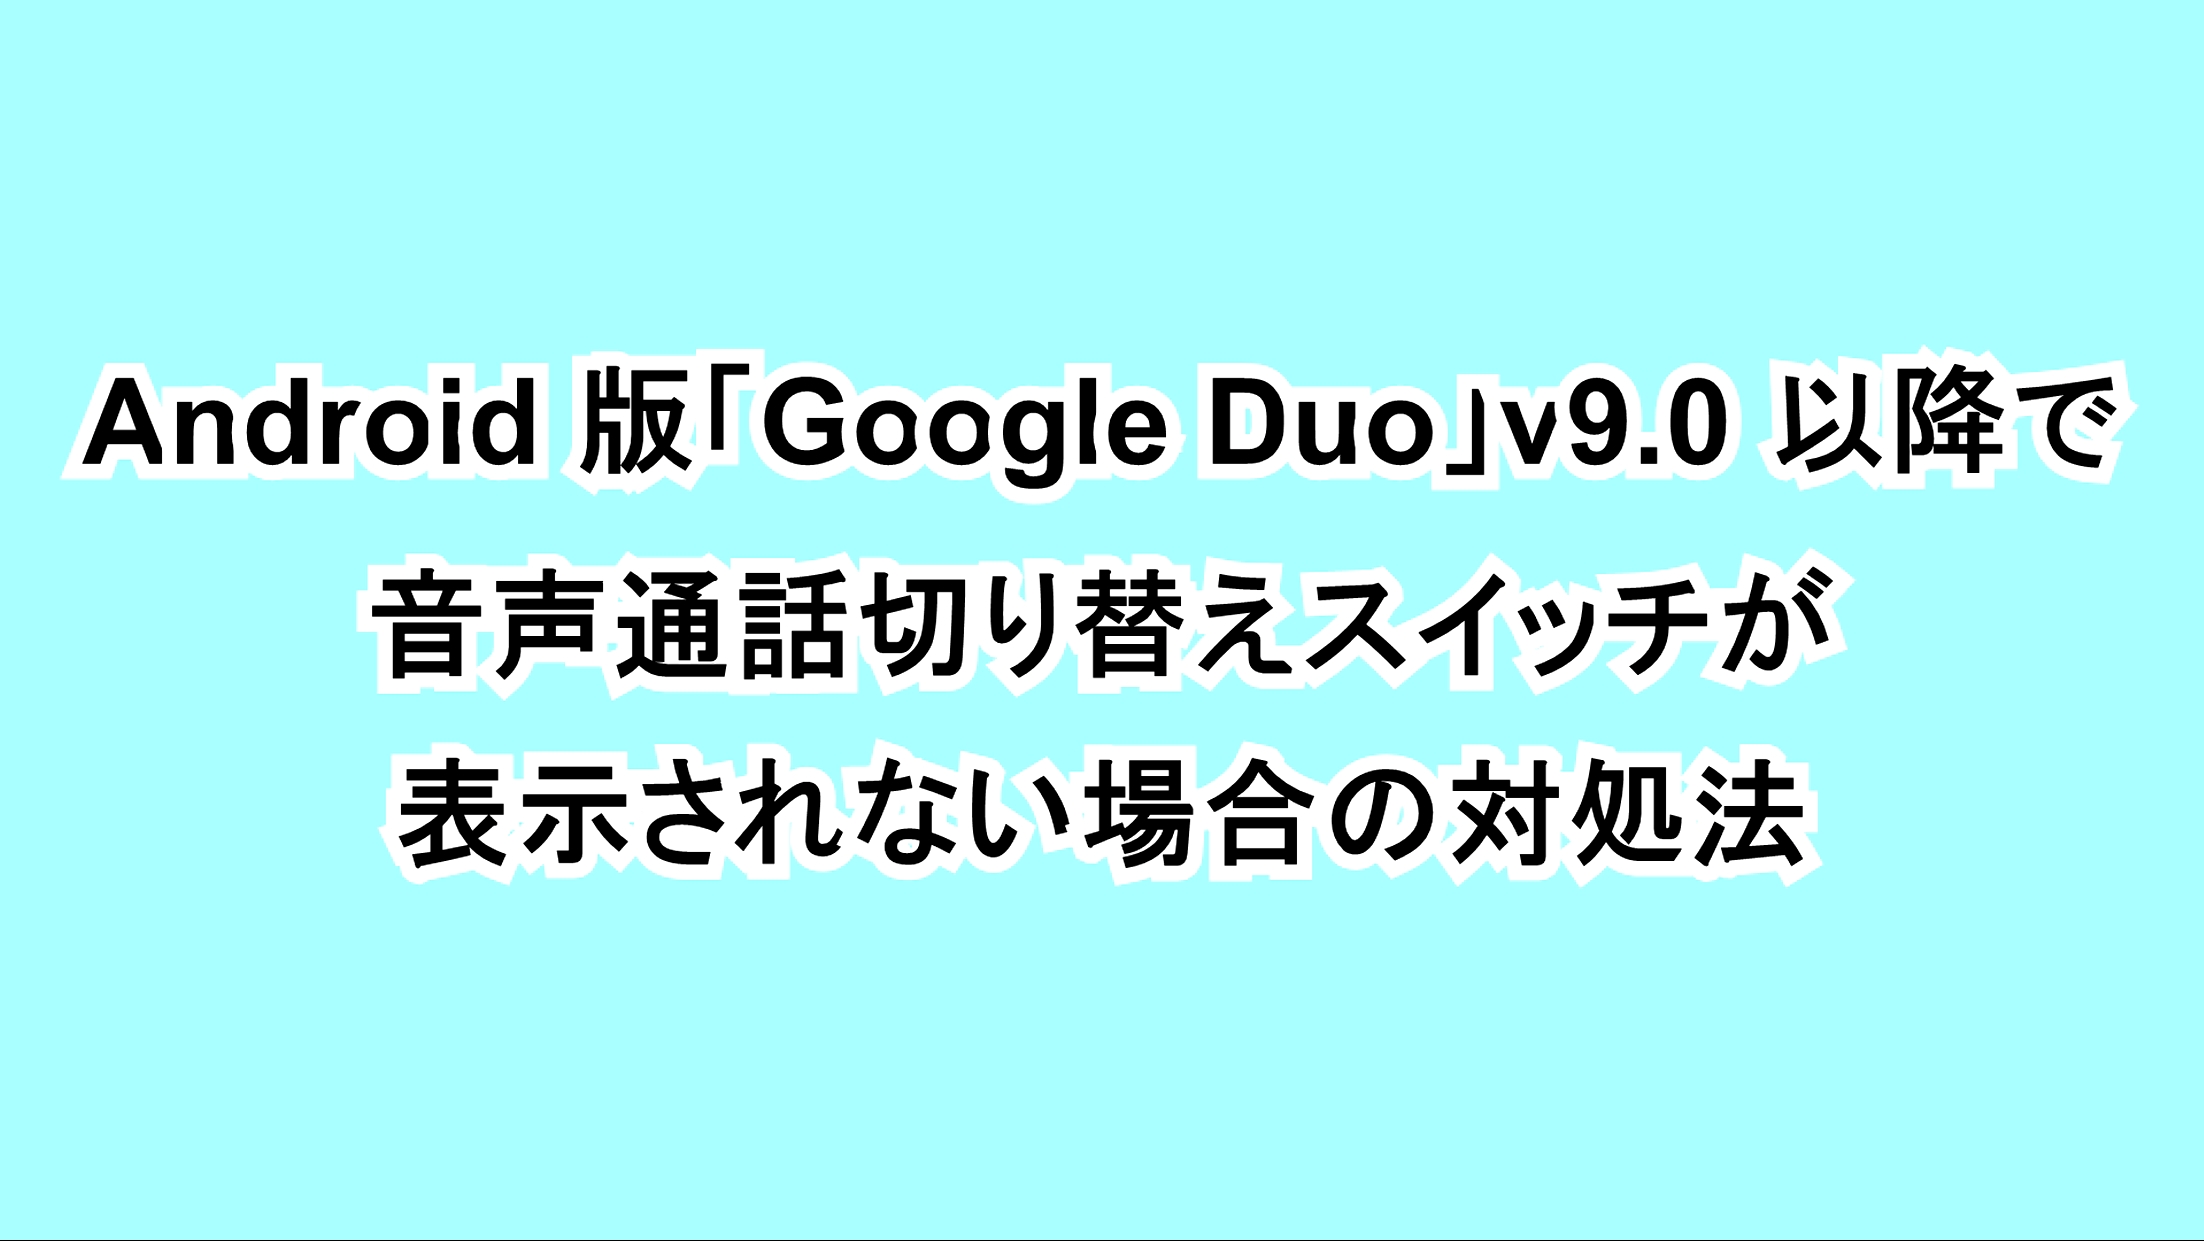 Android版「Google Duo」v9.0以降で音声通話切り替えスイッチが表示されない場合の対処法